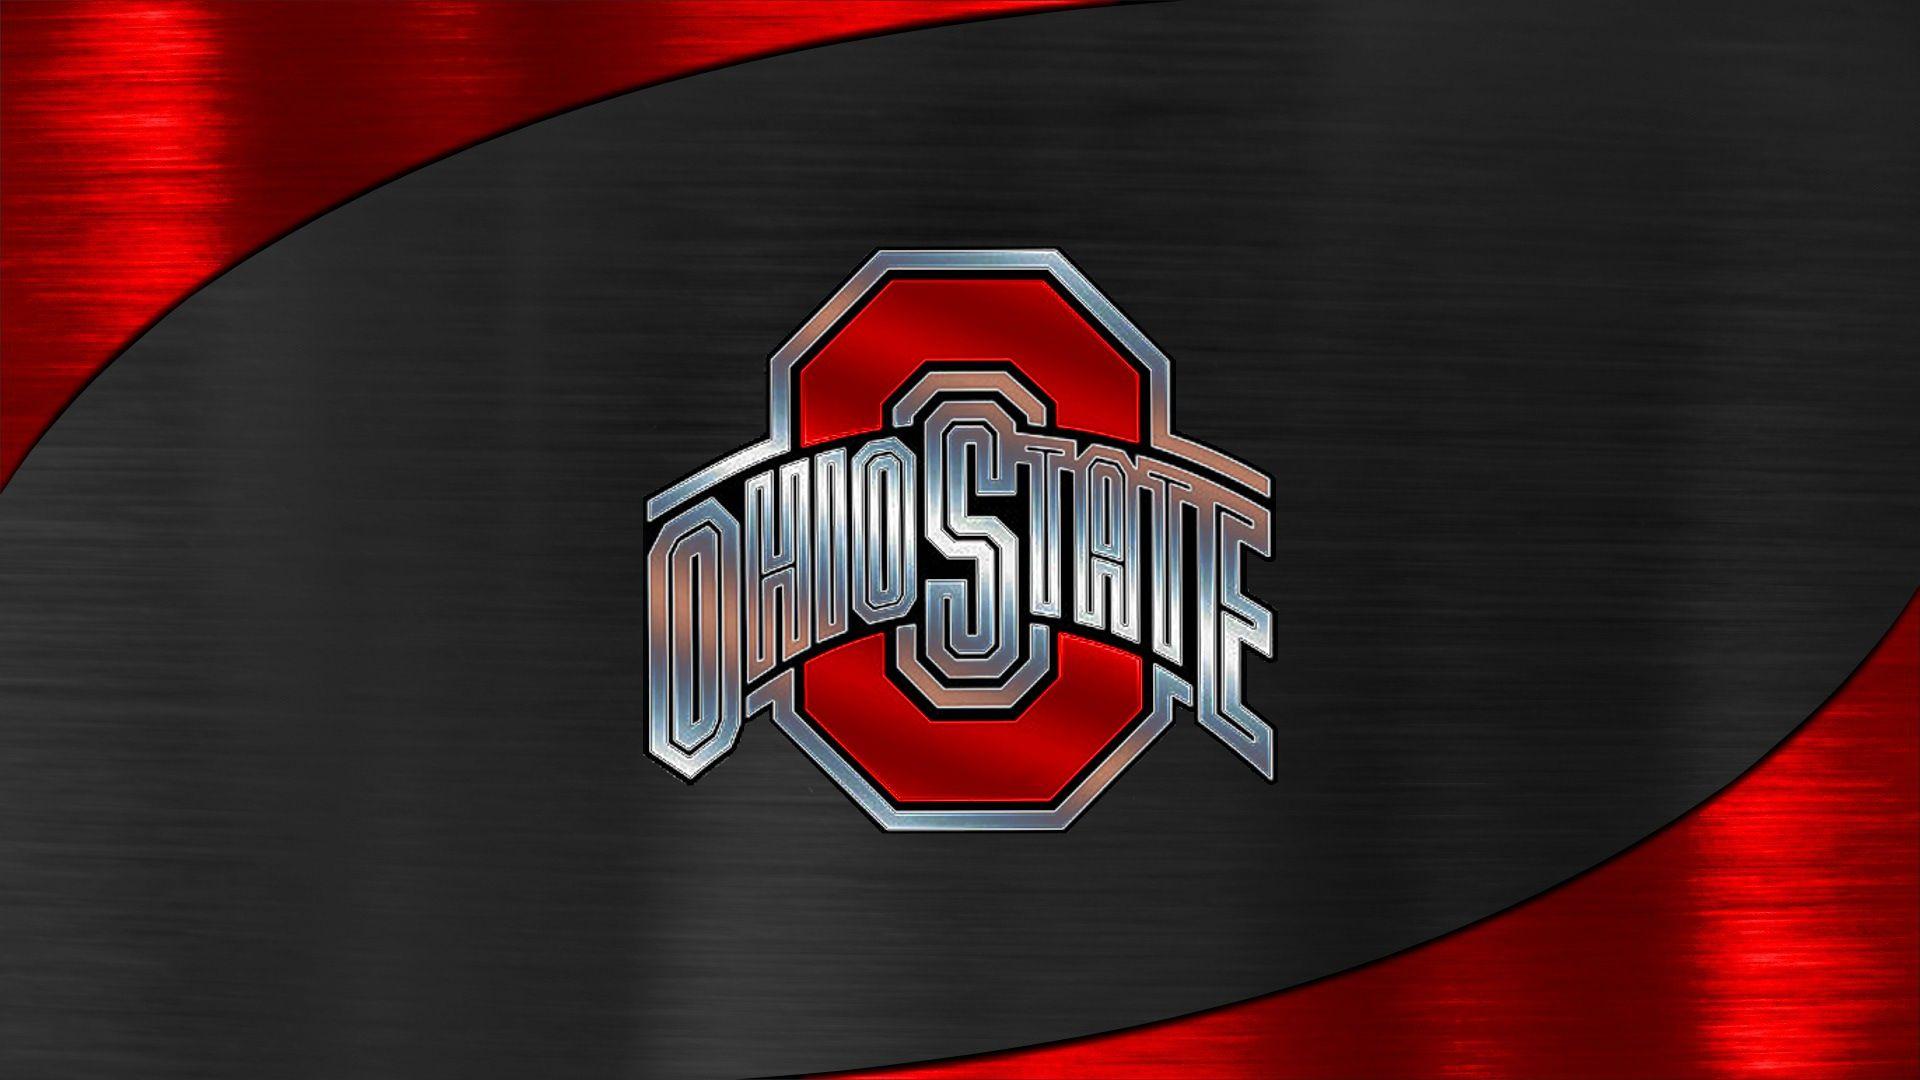 Ohio State Football Image